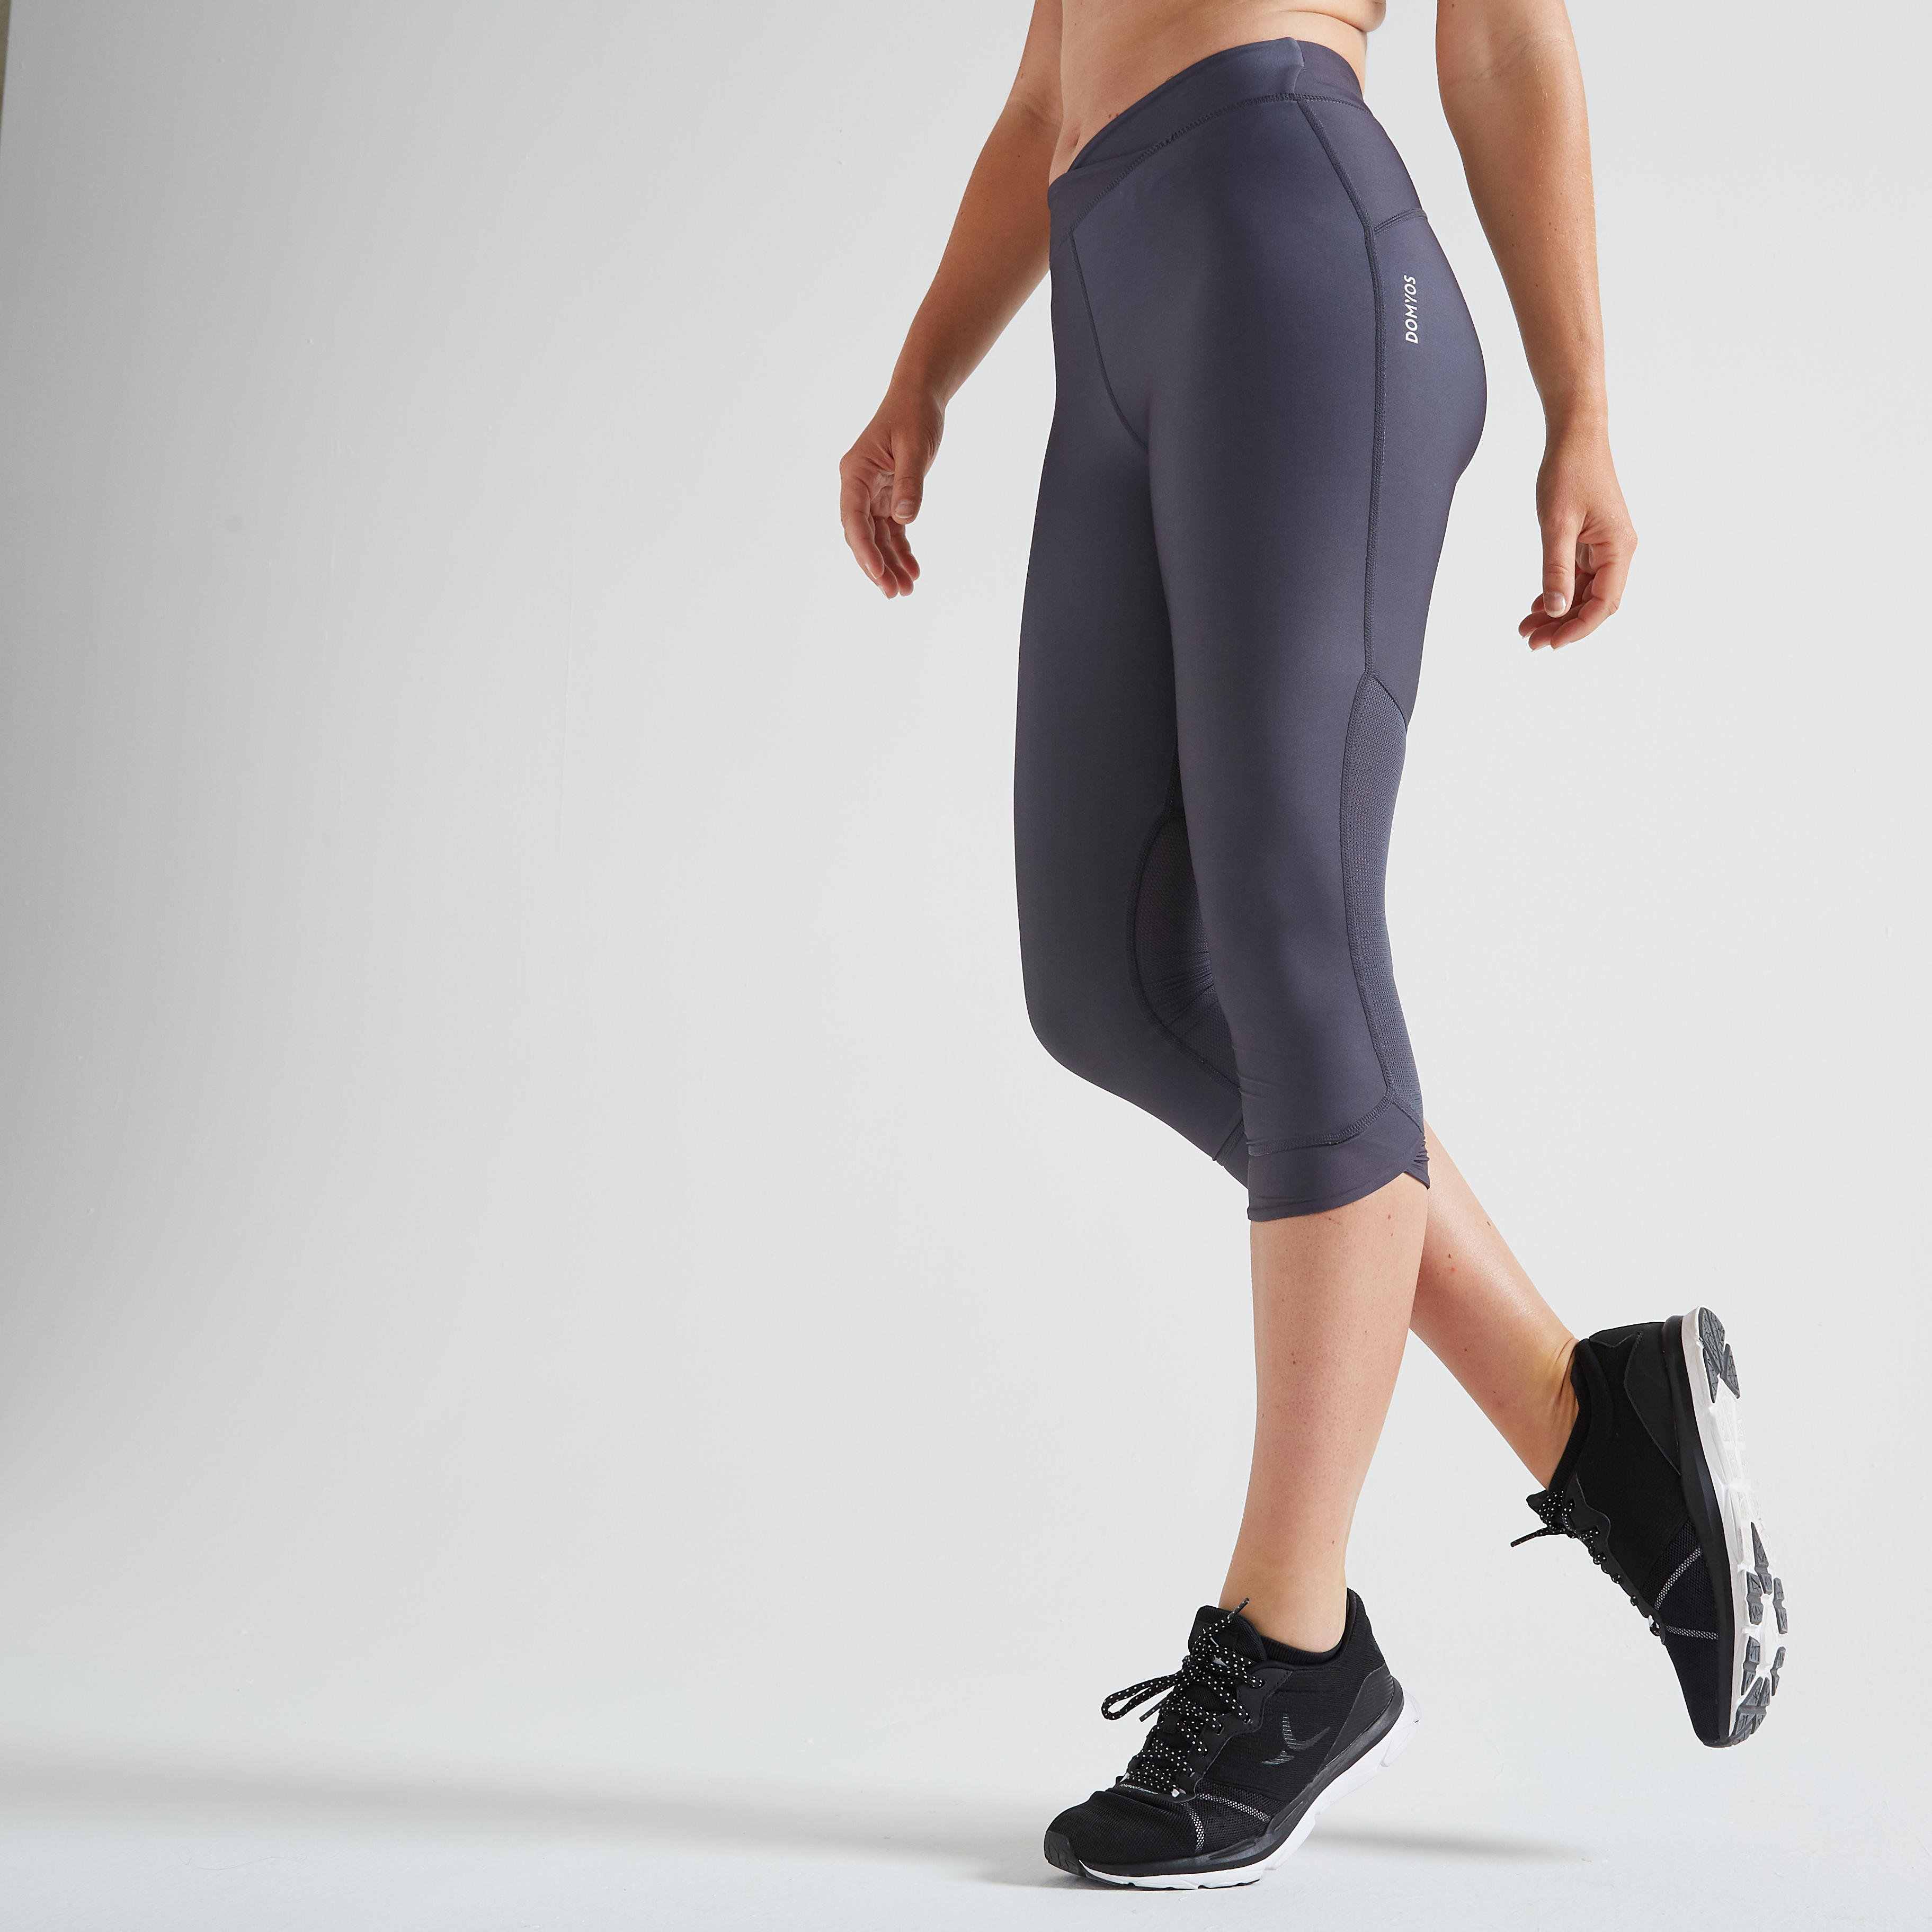 Power 7/8 Workout Leggings - Grey Dapple Print, Women's Leggings